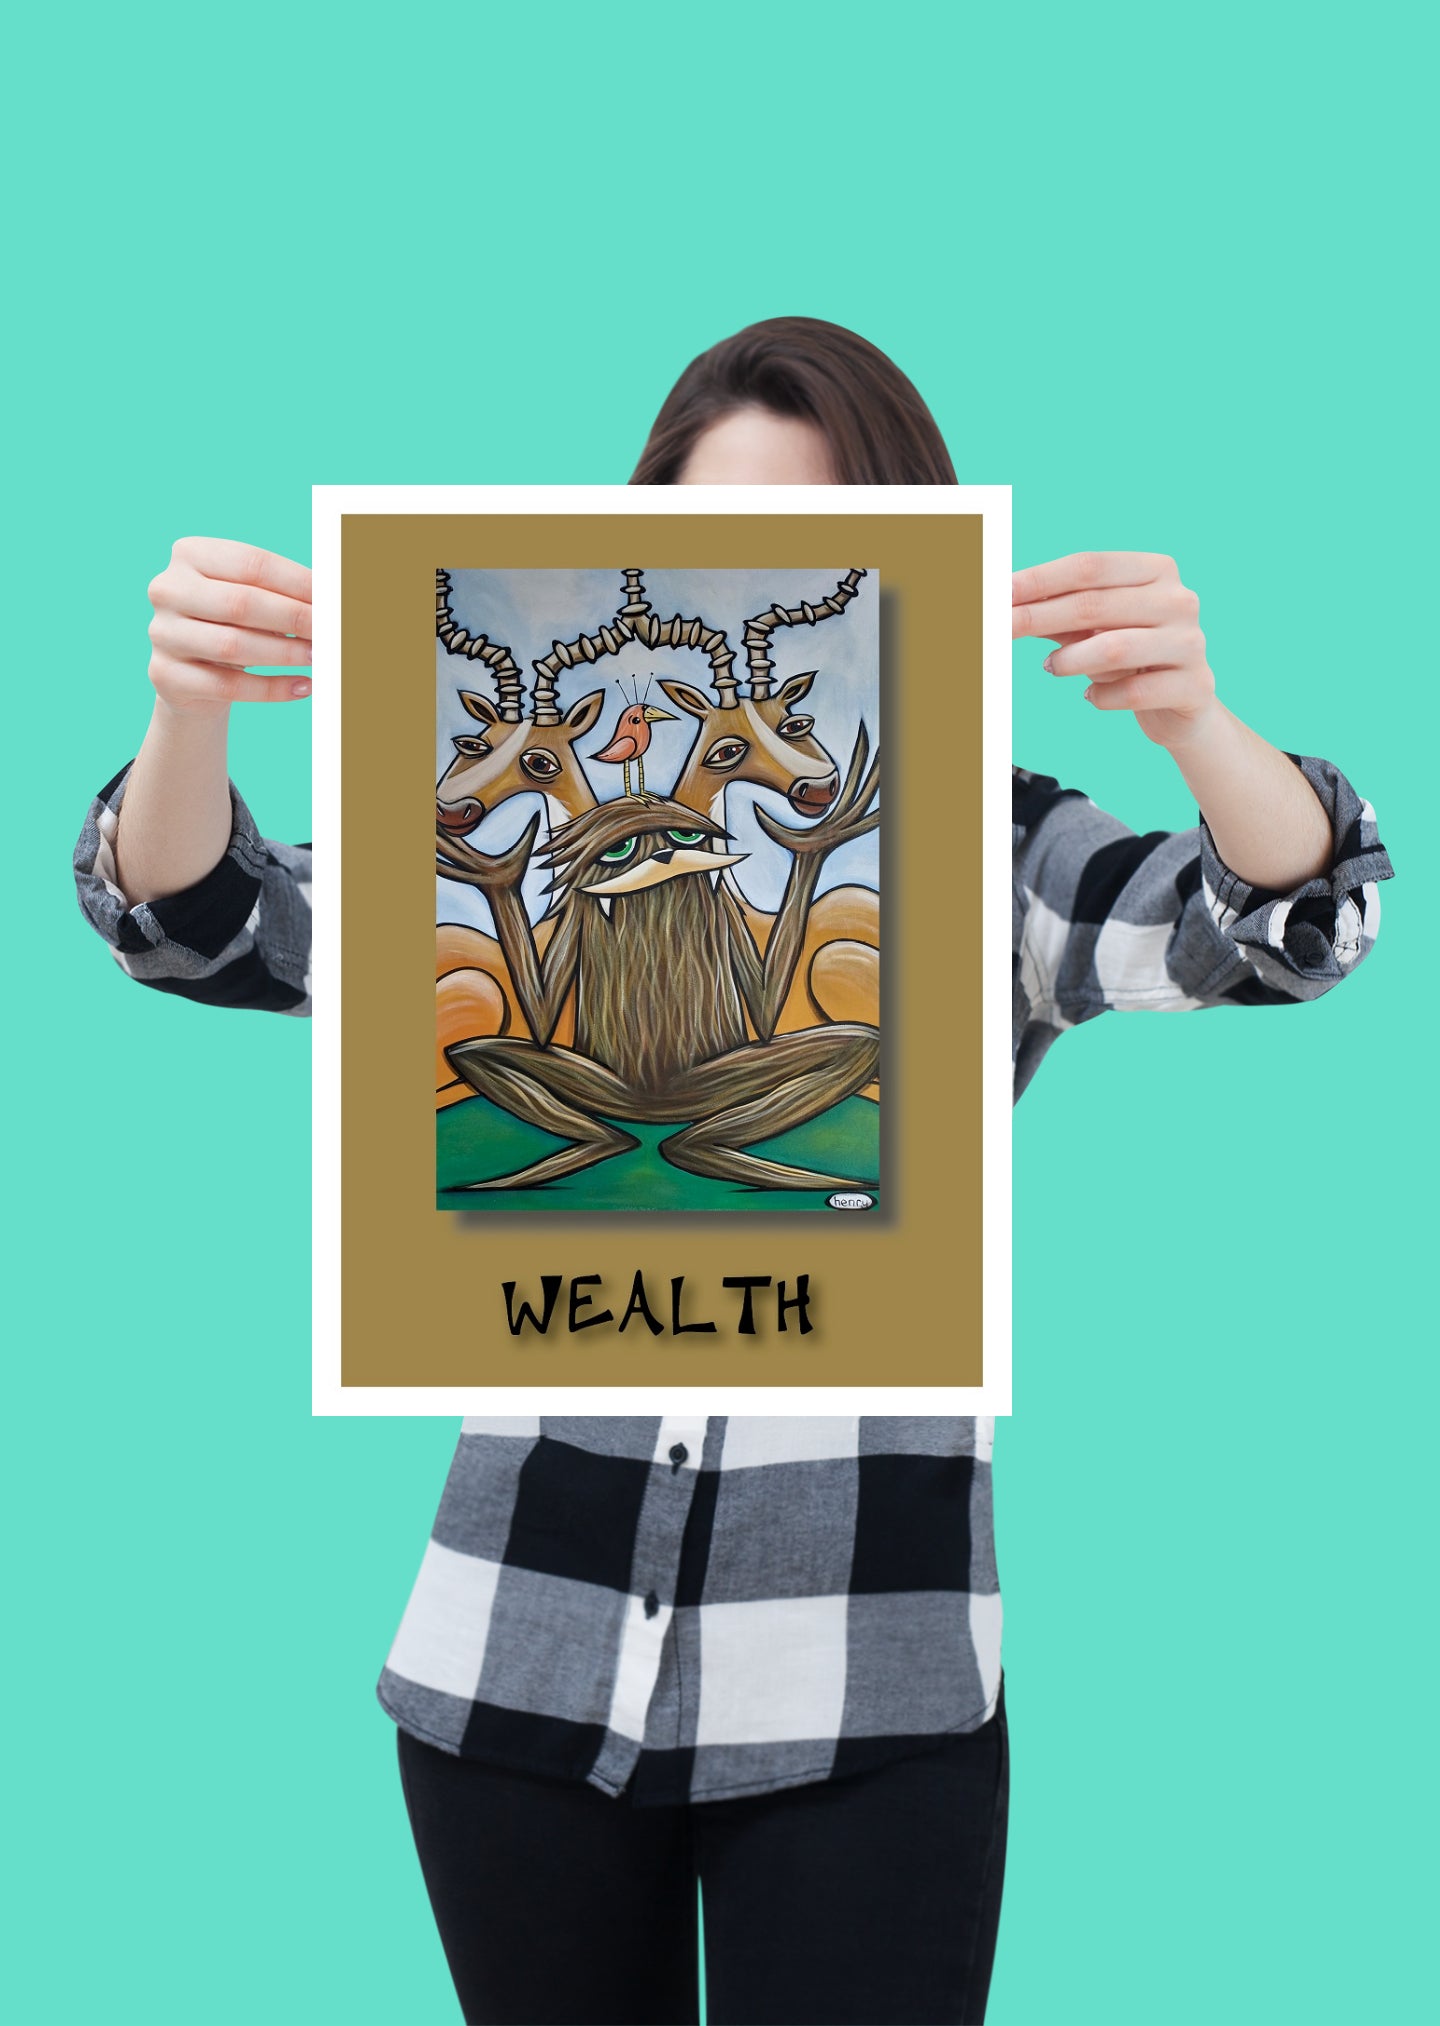 Wealth - A Radical Abundance Poster